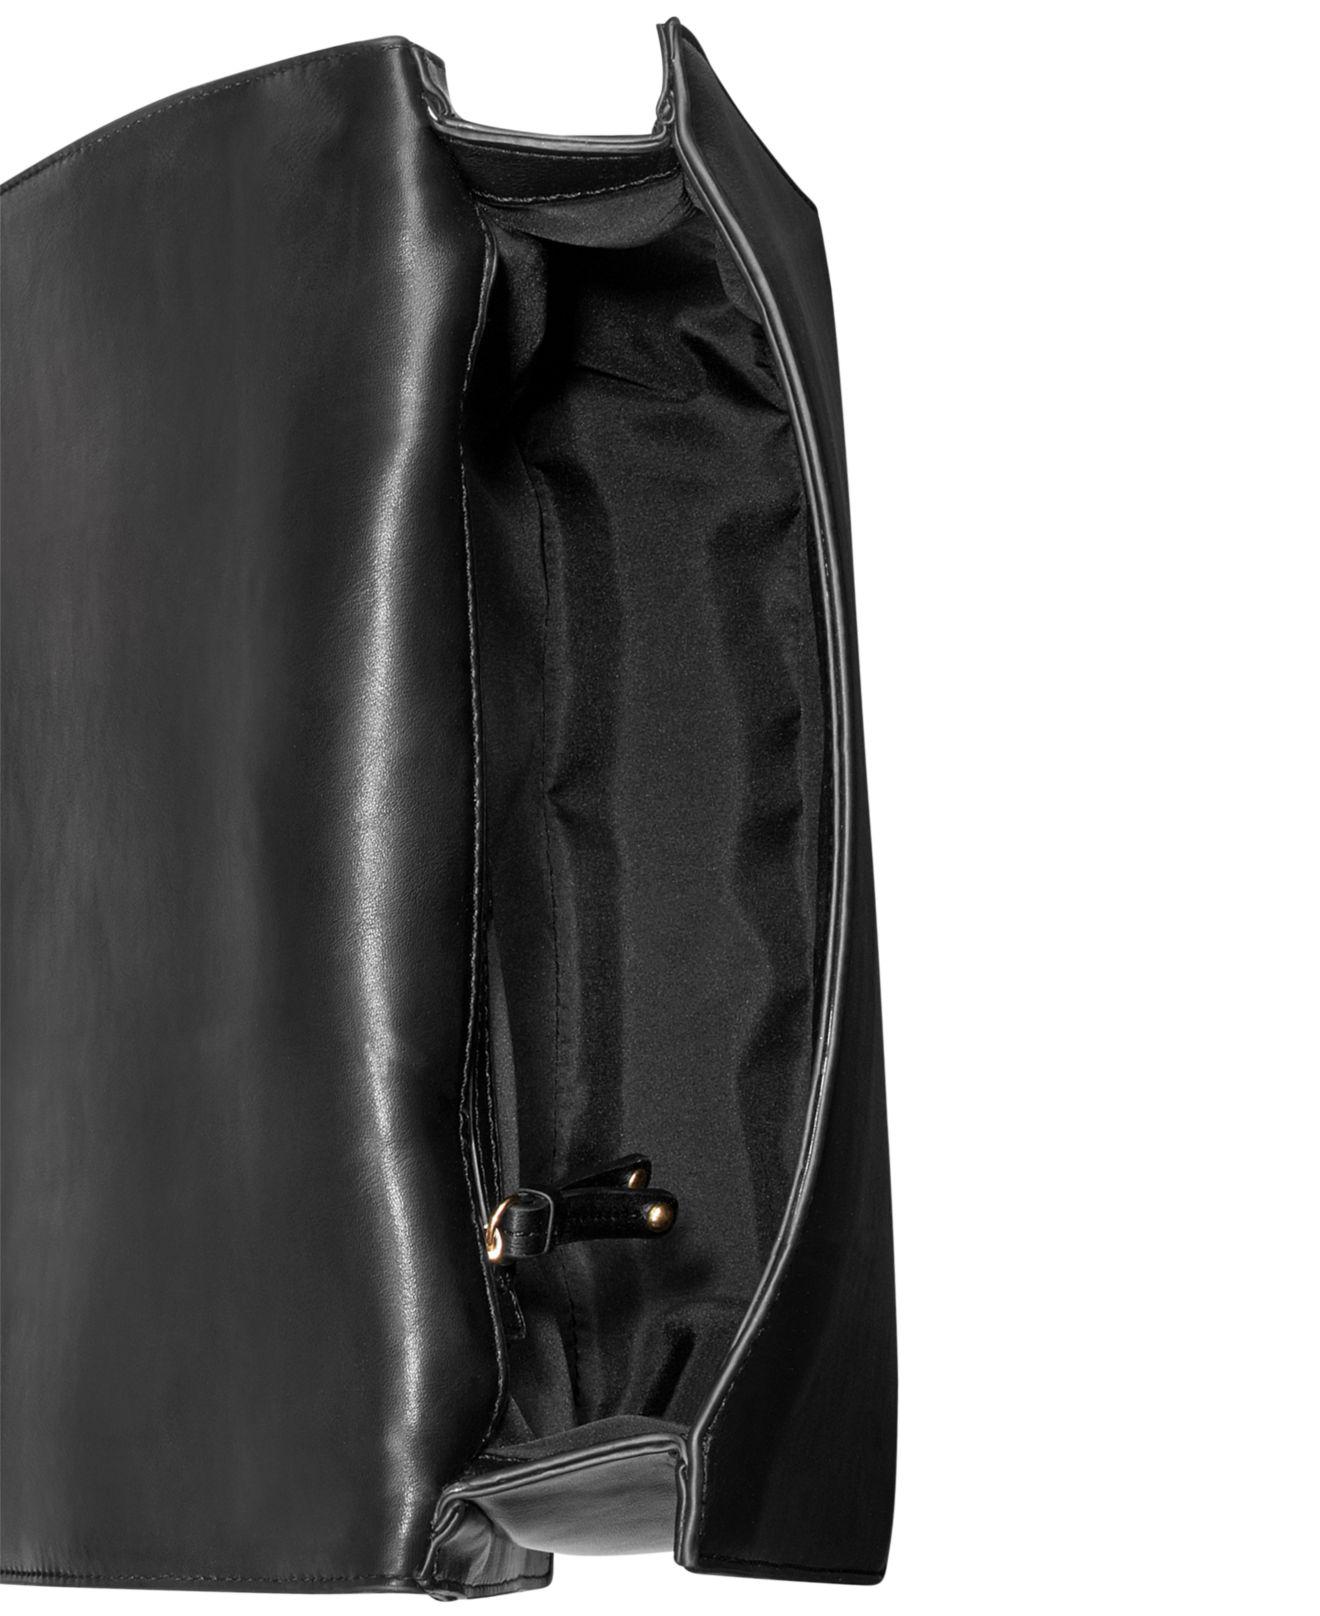 Nine West Inaya Shoulder Bag in Black - Lyst